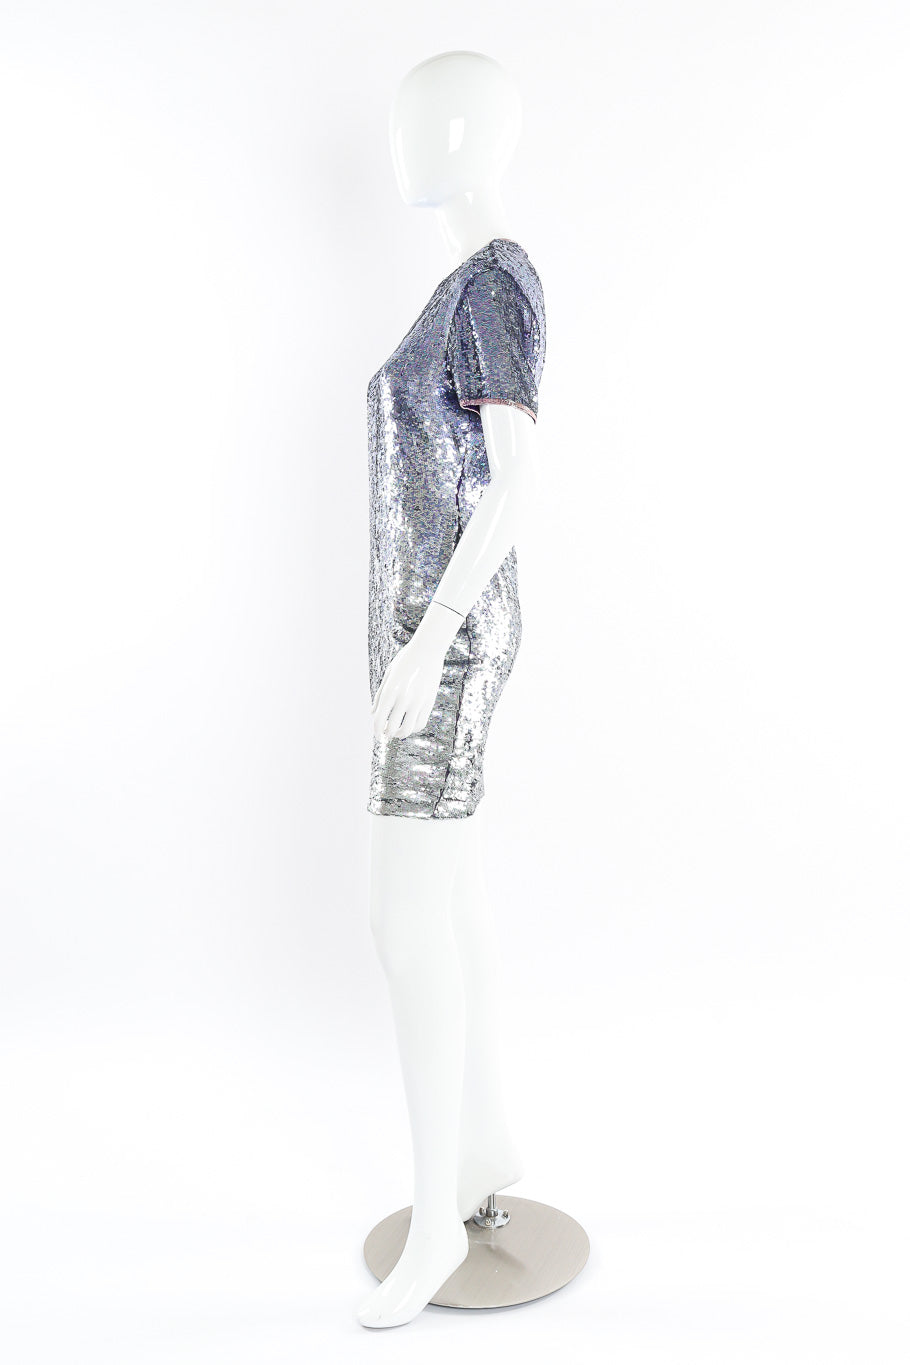 Sequin dress by Naeem Khan mannequin full side @recessla